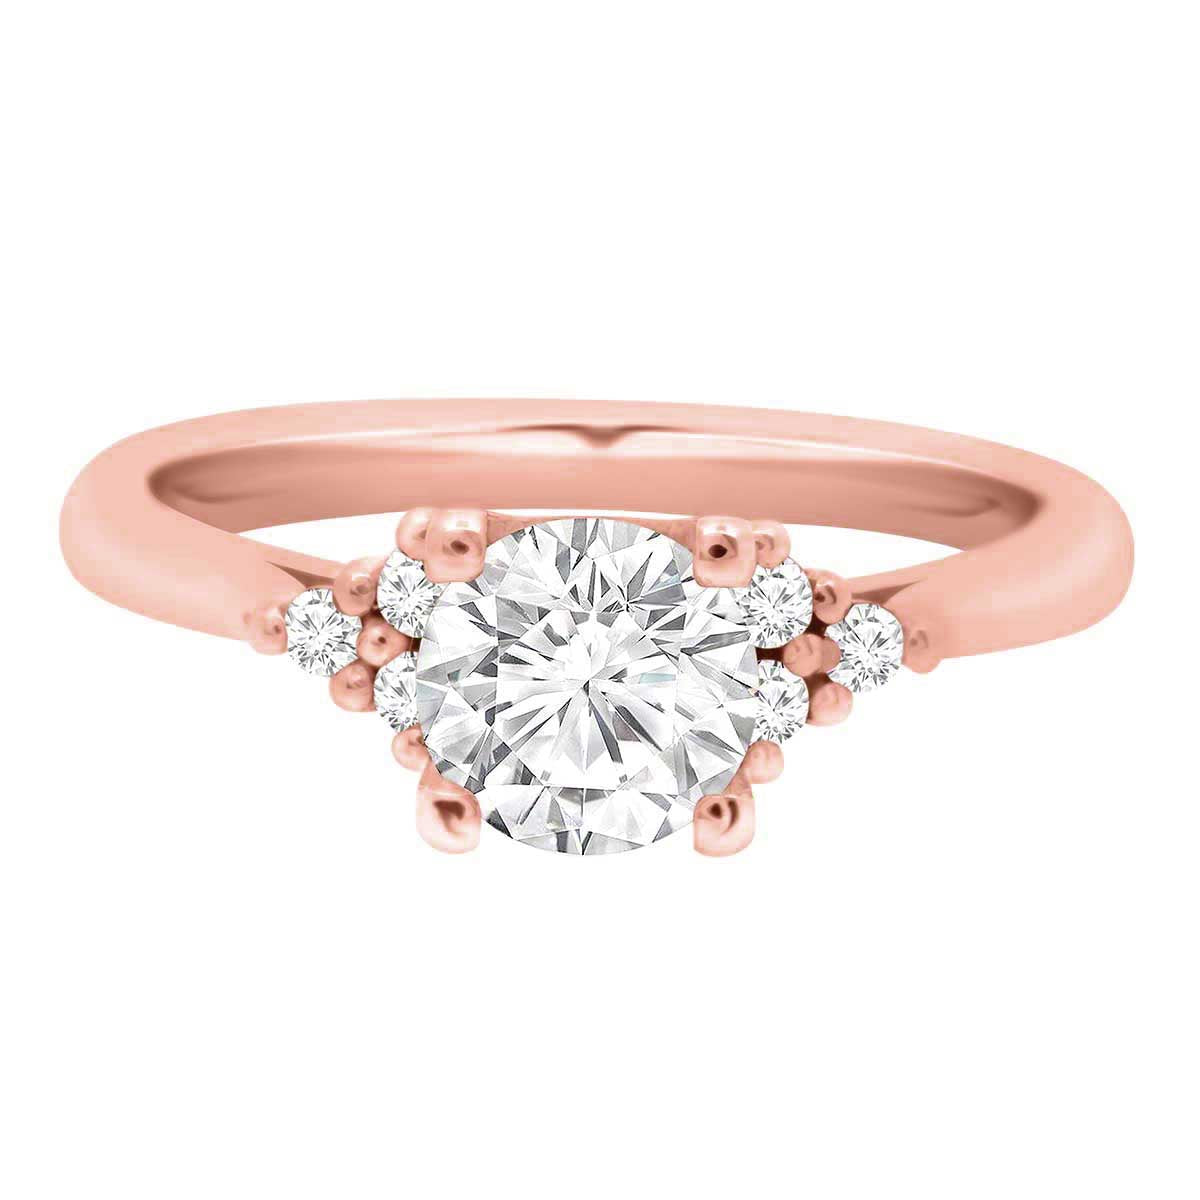 Handmade Engagement Ring in rose gold